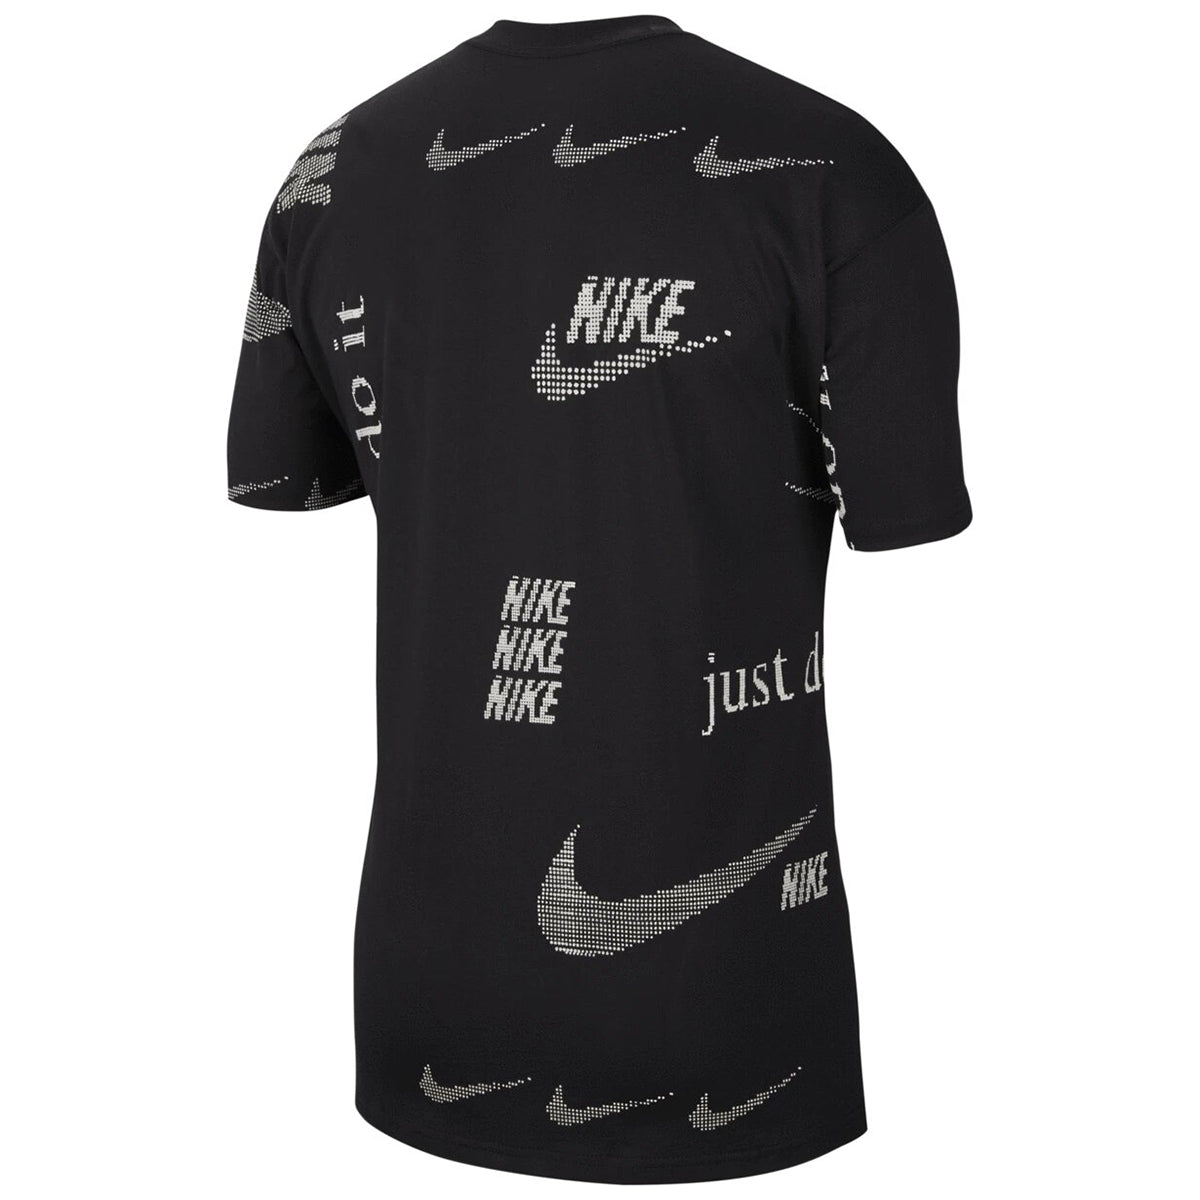 Nike Sportswear T-shirt Mens Style : Cw0377